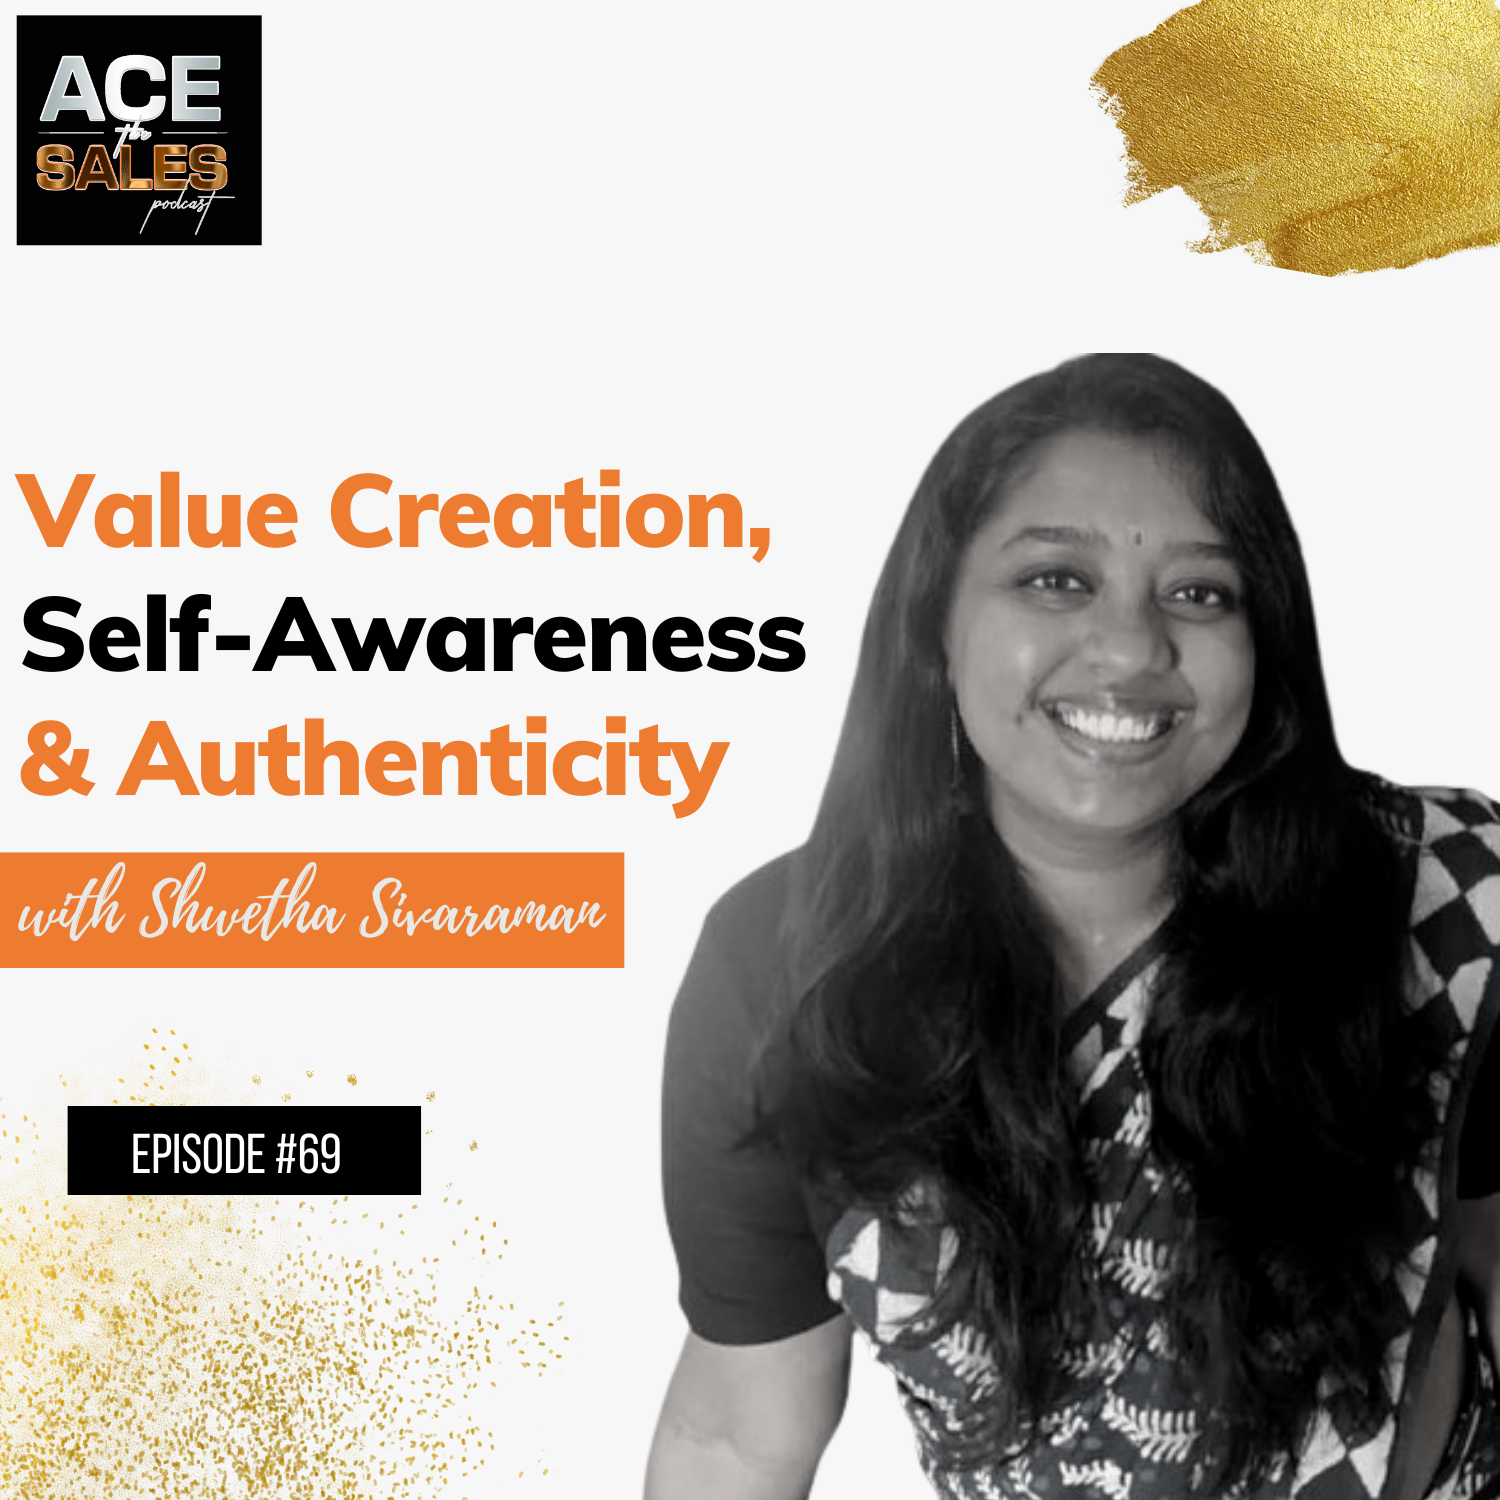 Value creation, Self-awareness, and Authenticity - Shwetha Sivaraman